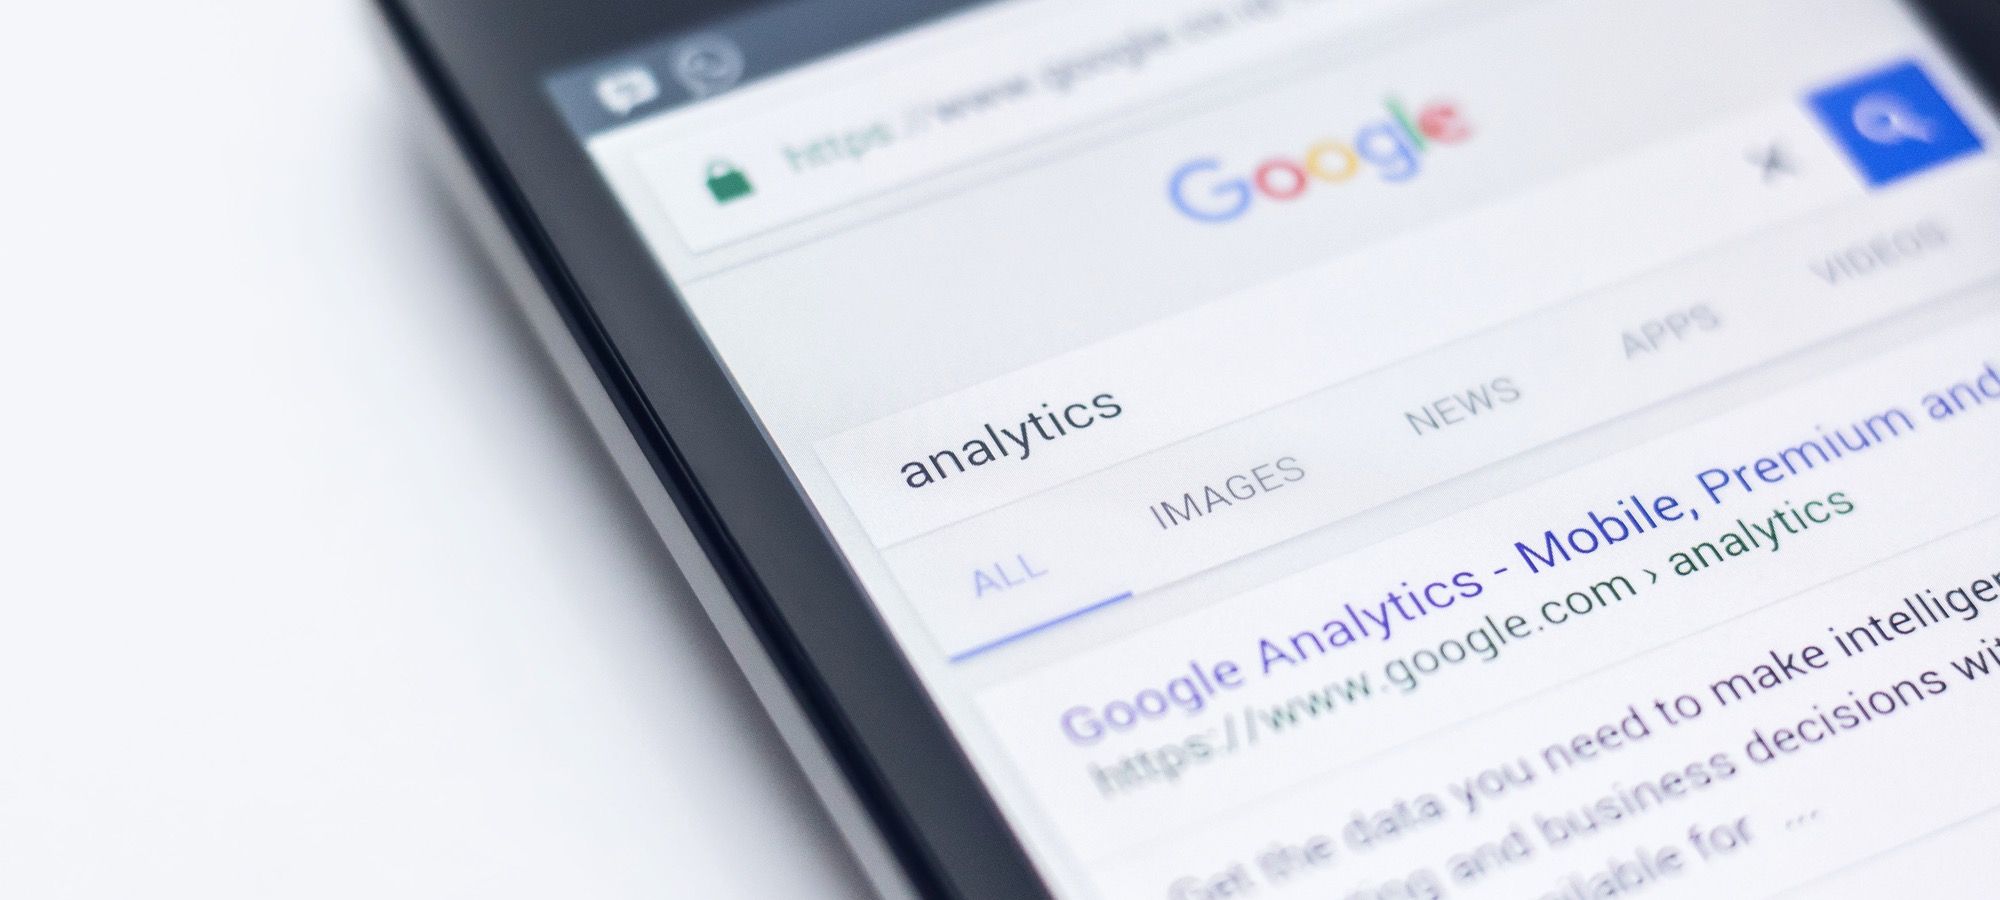 How to Install Google Analytics in Joomla 3